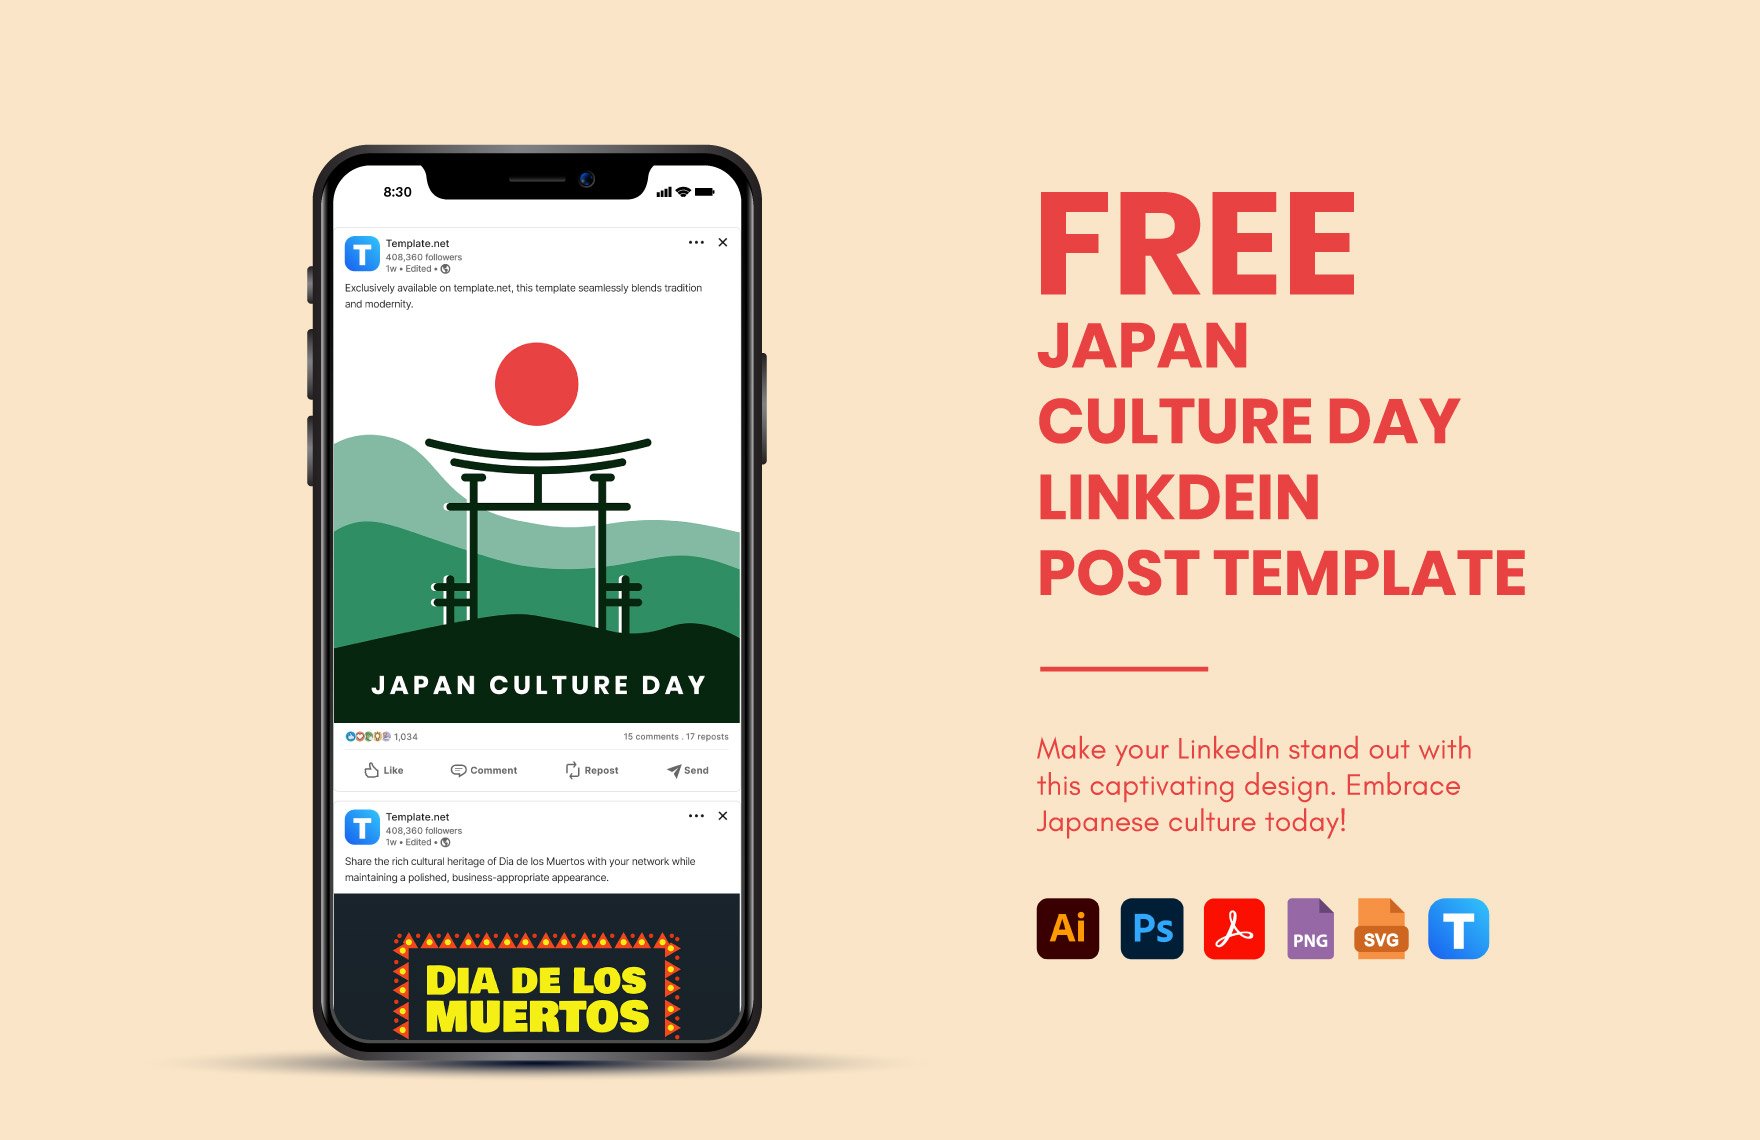 Free Japan Culture Day LinkedIn Post Template in PDF, Illustrator, PSD, SVG, PNG